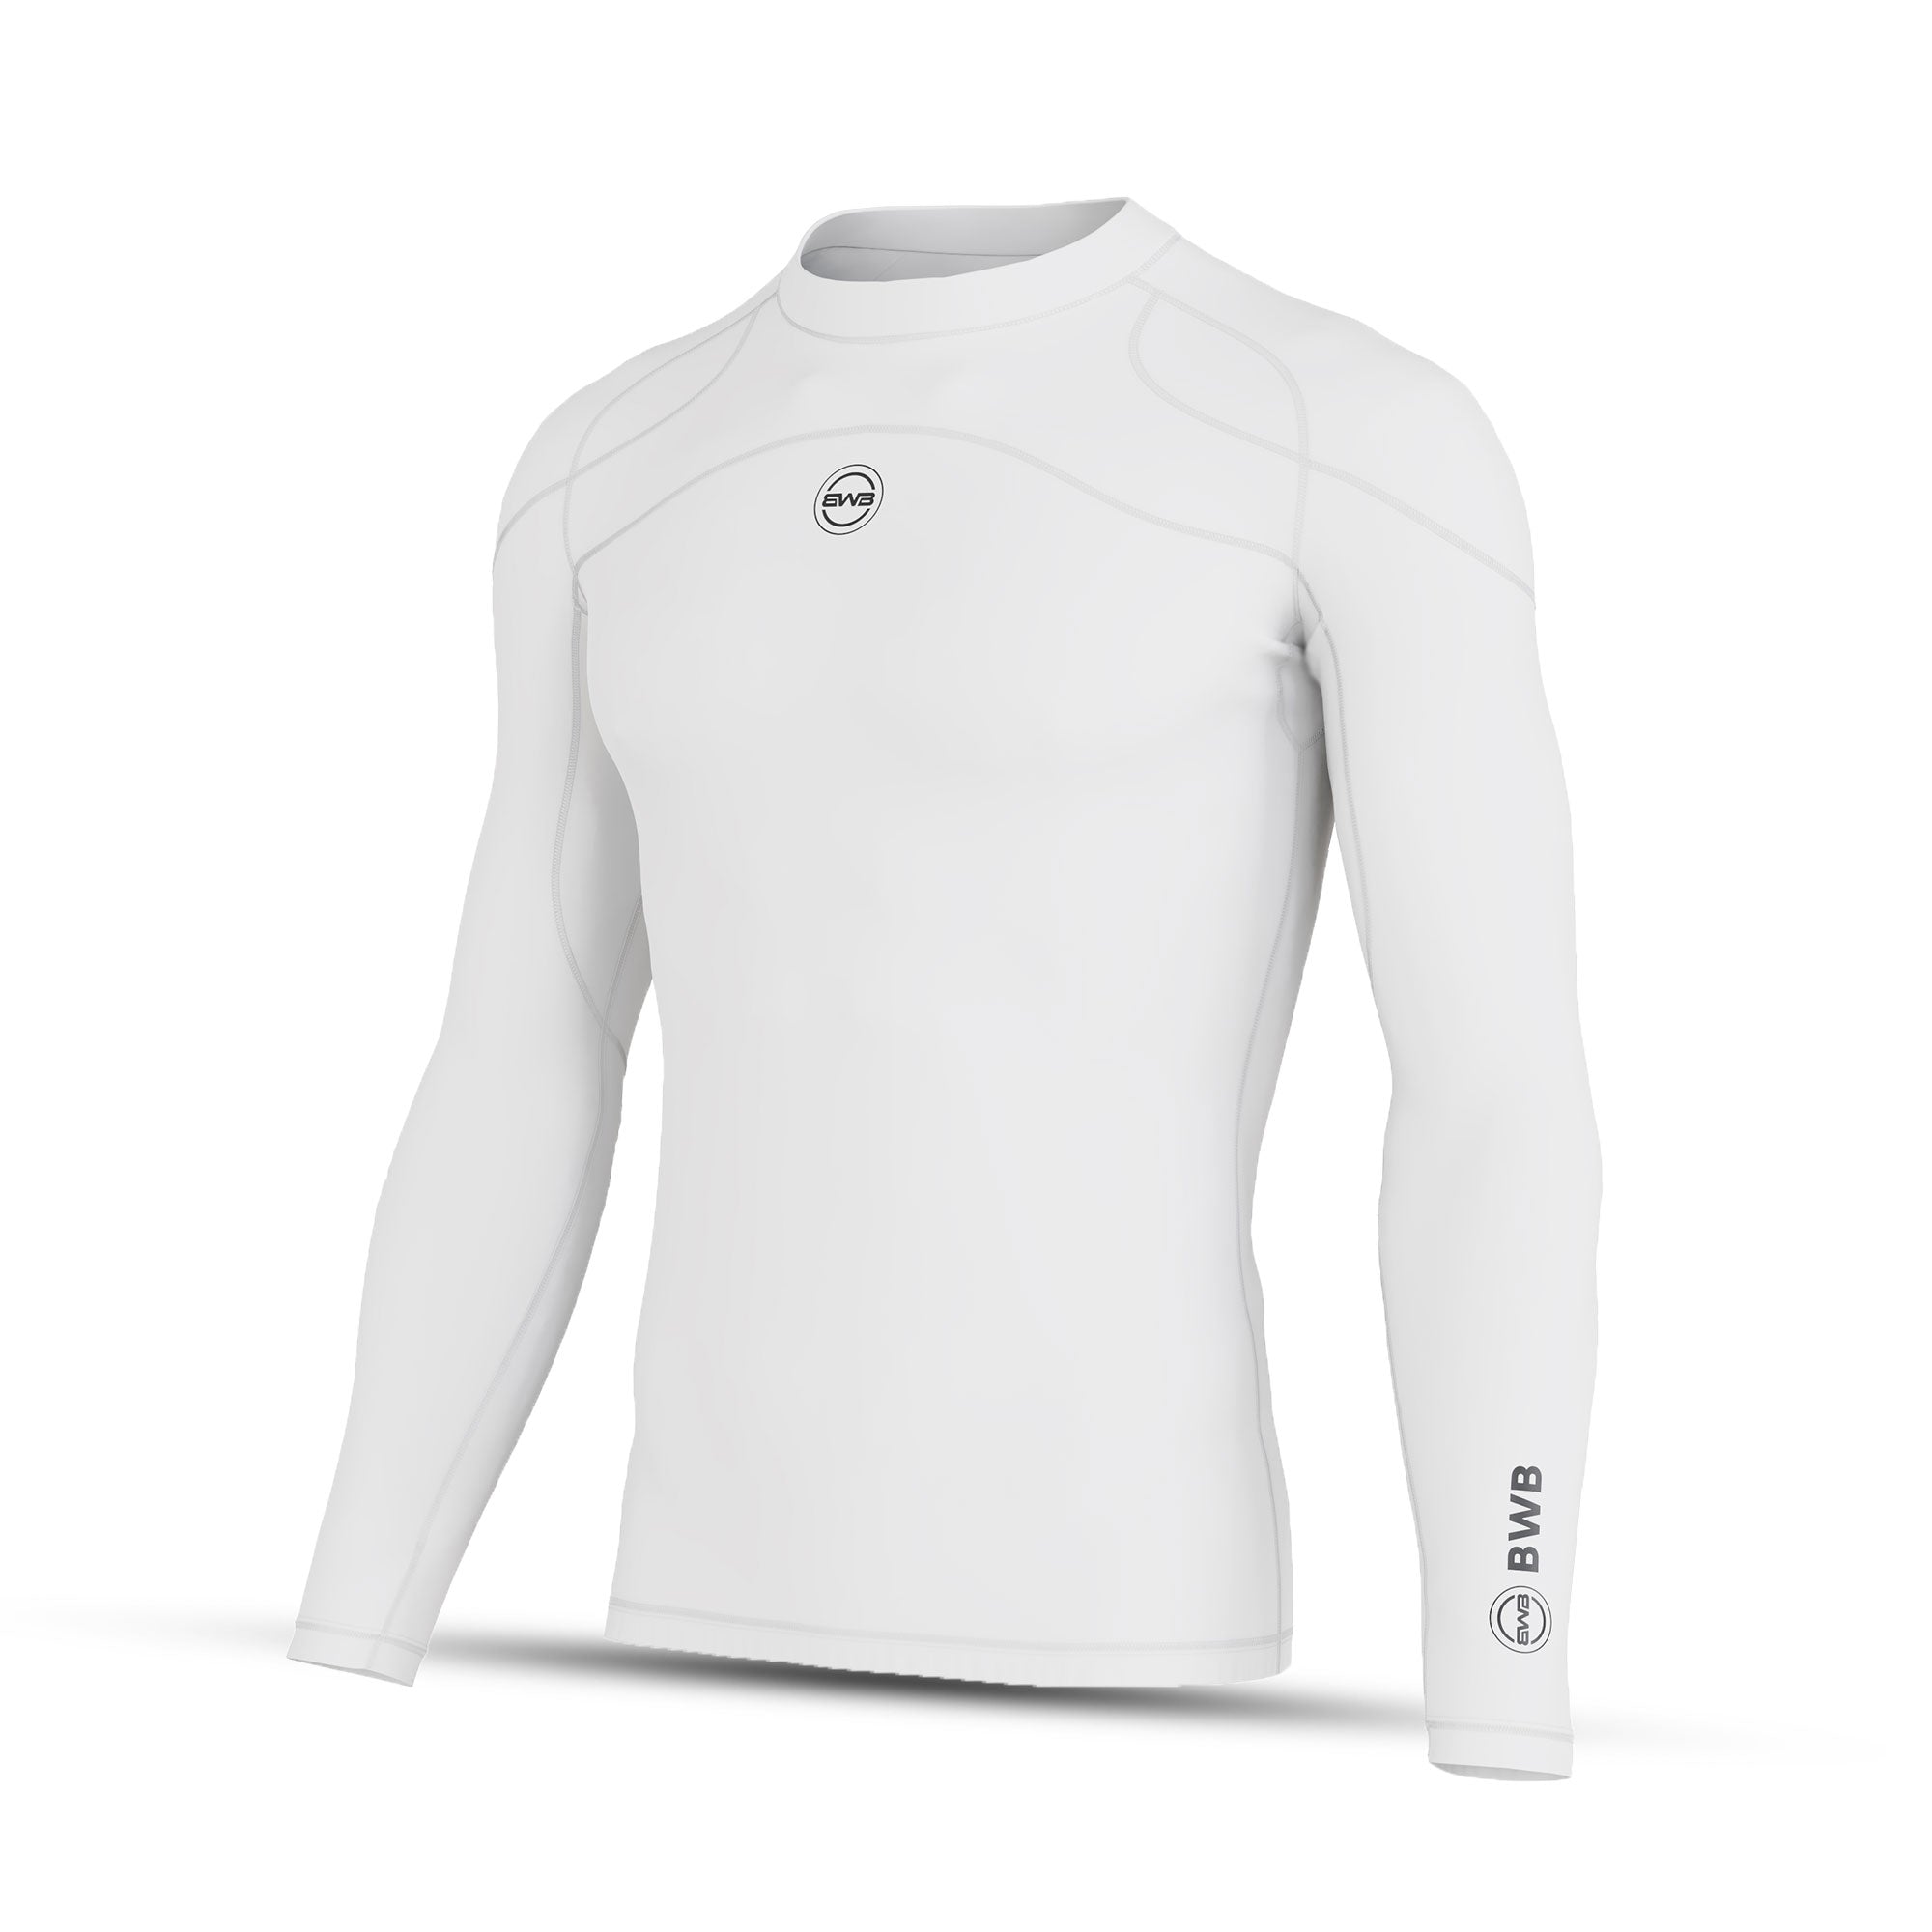 Skins A200 long sleeve compression top long sleeve shirt fitness sport  shirt